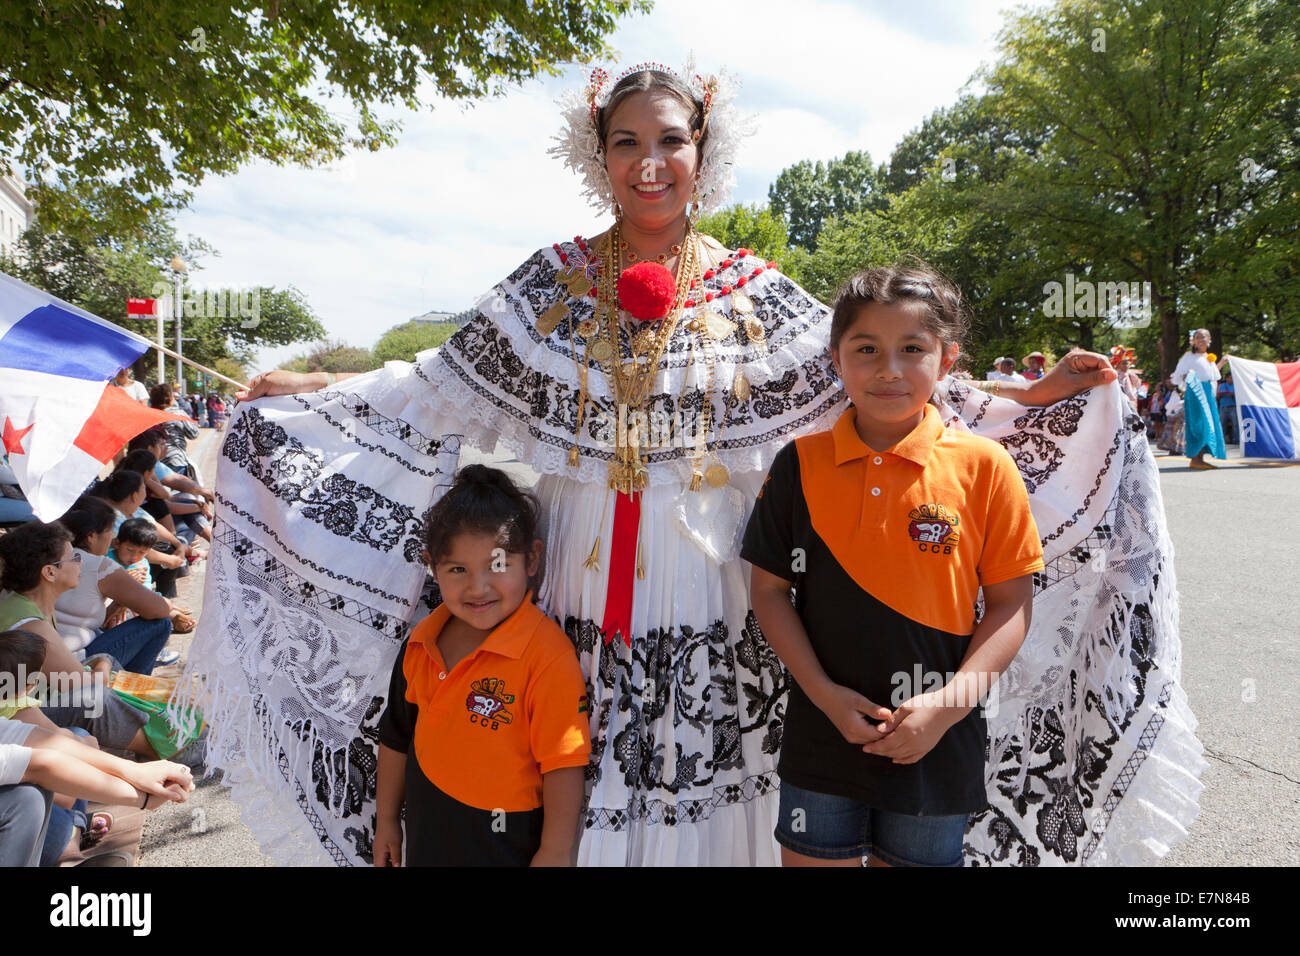 Jarabe Tapatio dancer posing with children at outdoor festival - Washington, DC USA Stock Photo